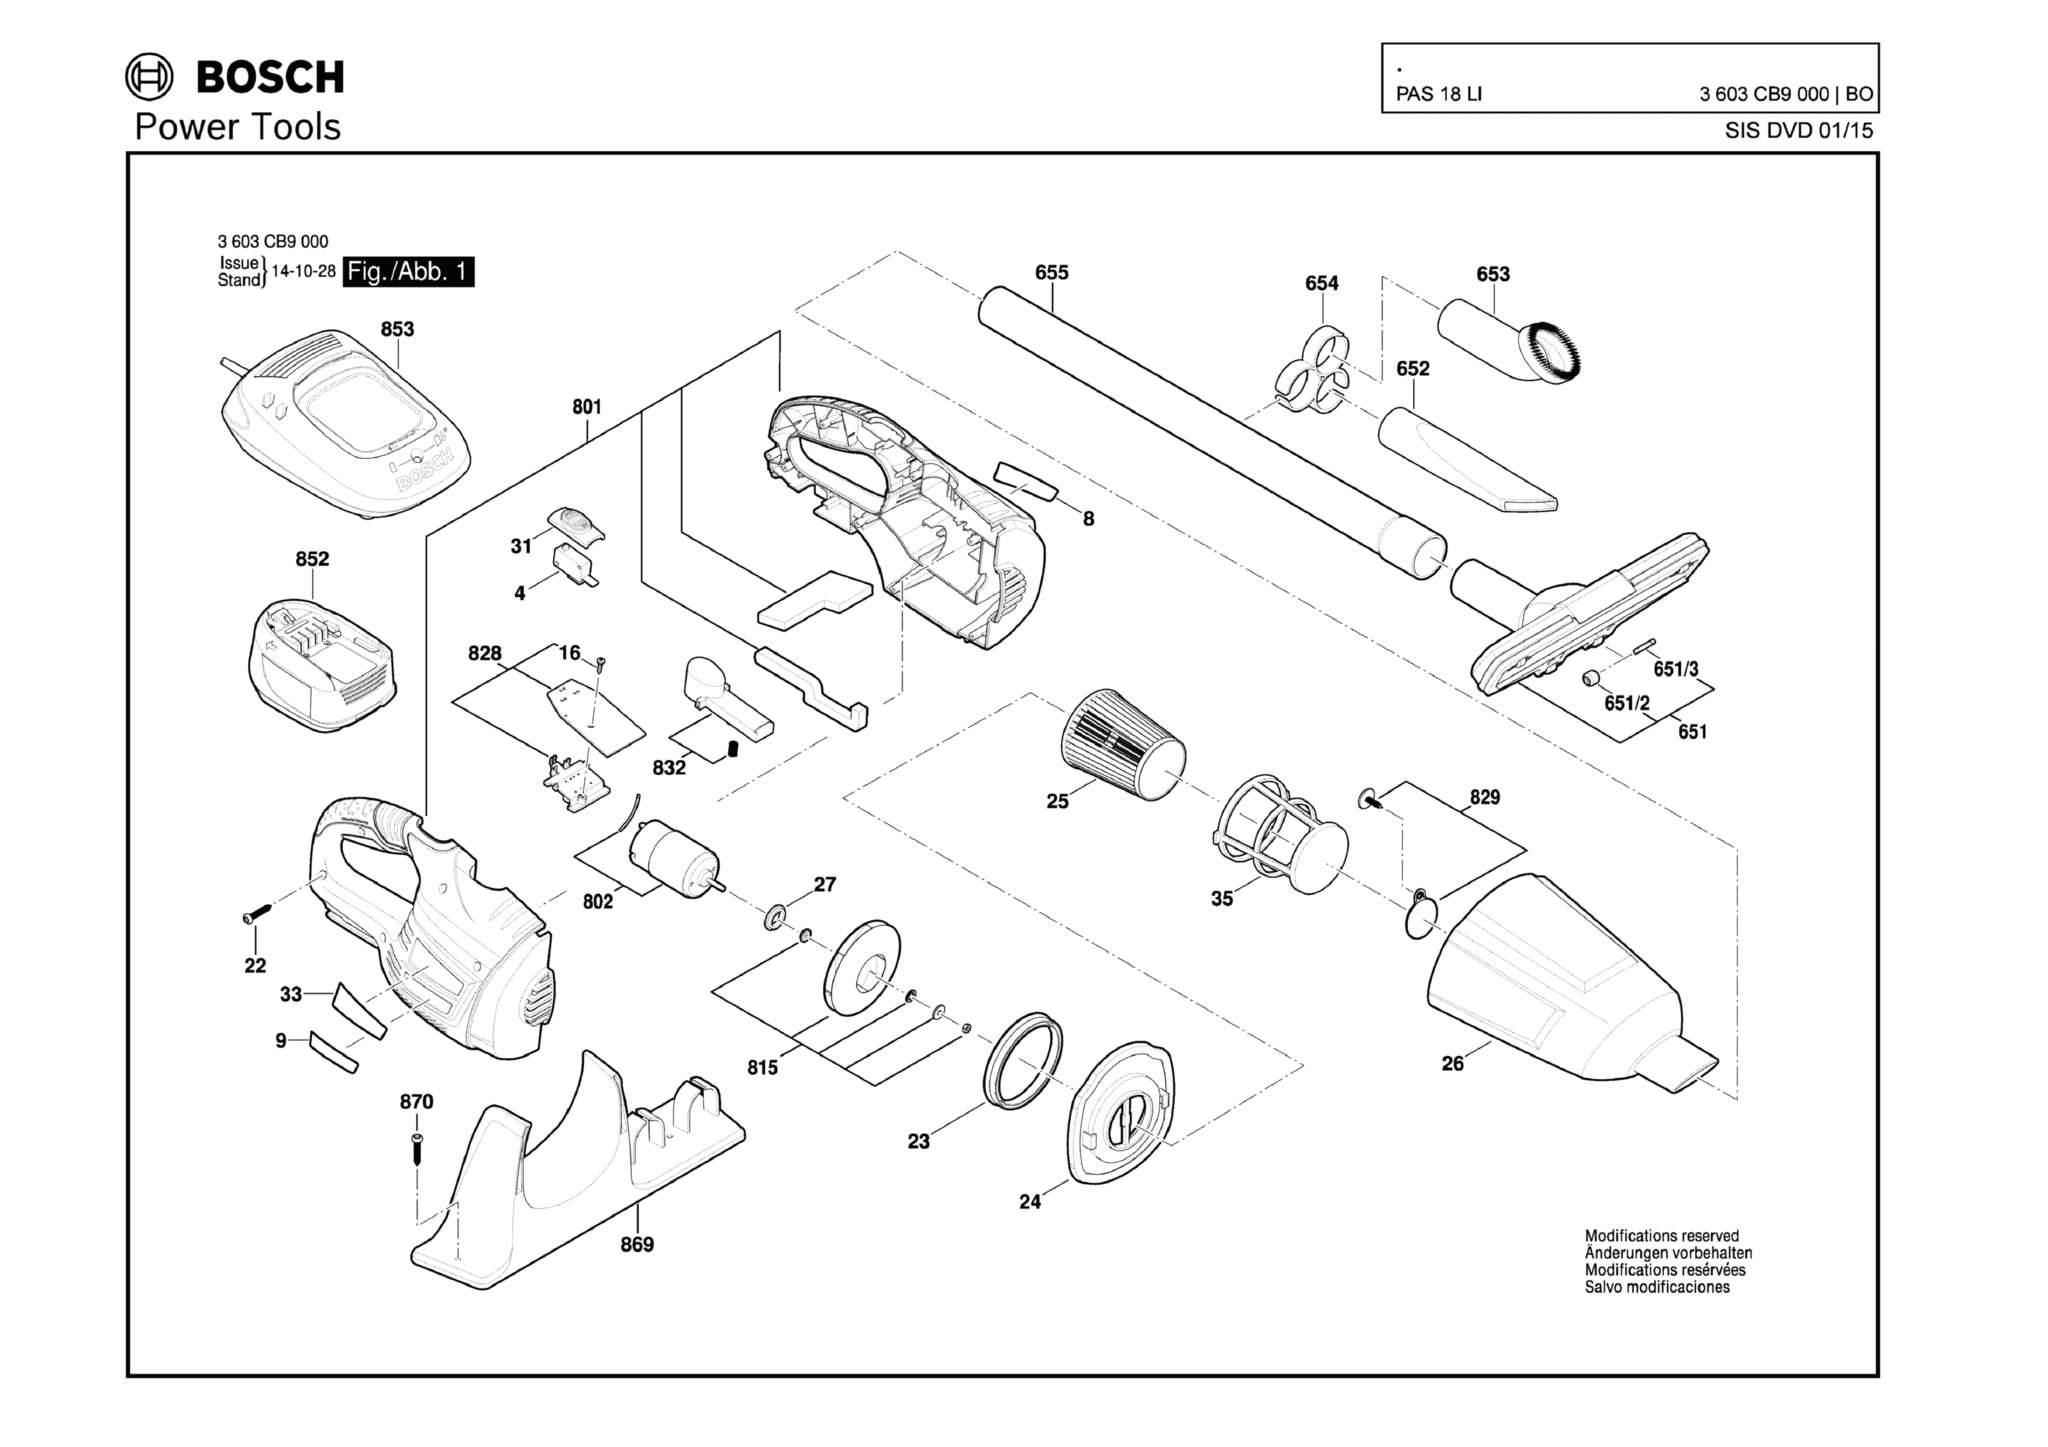 Запчасти, схема и деталировка Bosch PAS 18 LI (ТИП 3603CB9000)